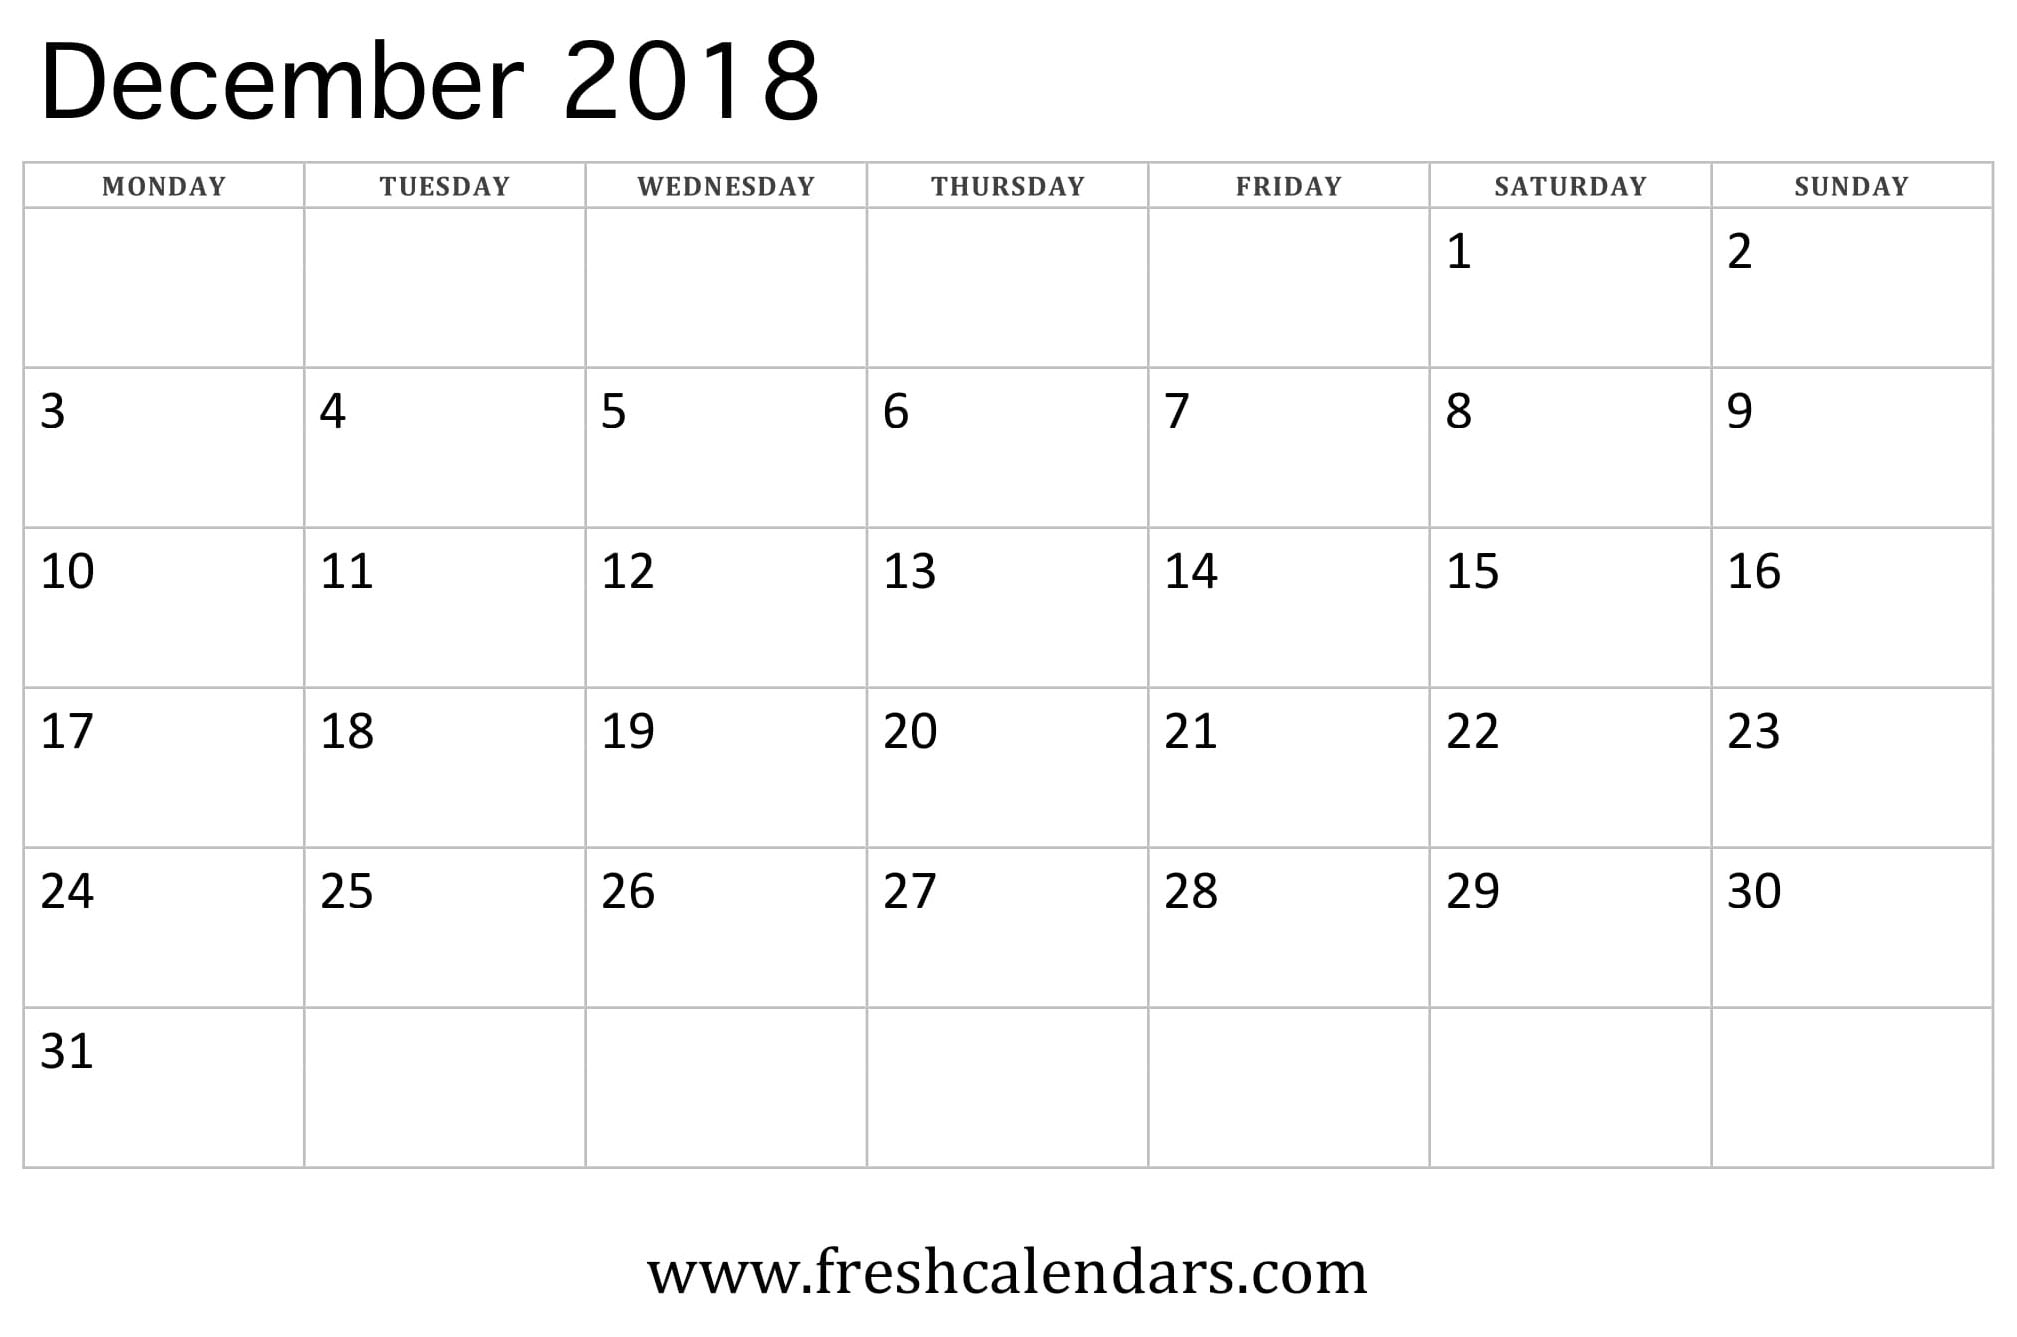 December 2018 Calendar Printable - Fresh Calendars